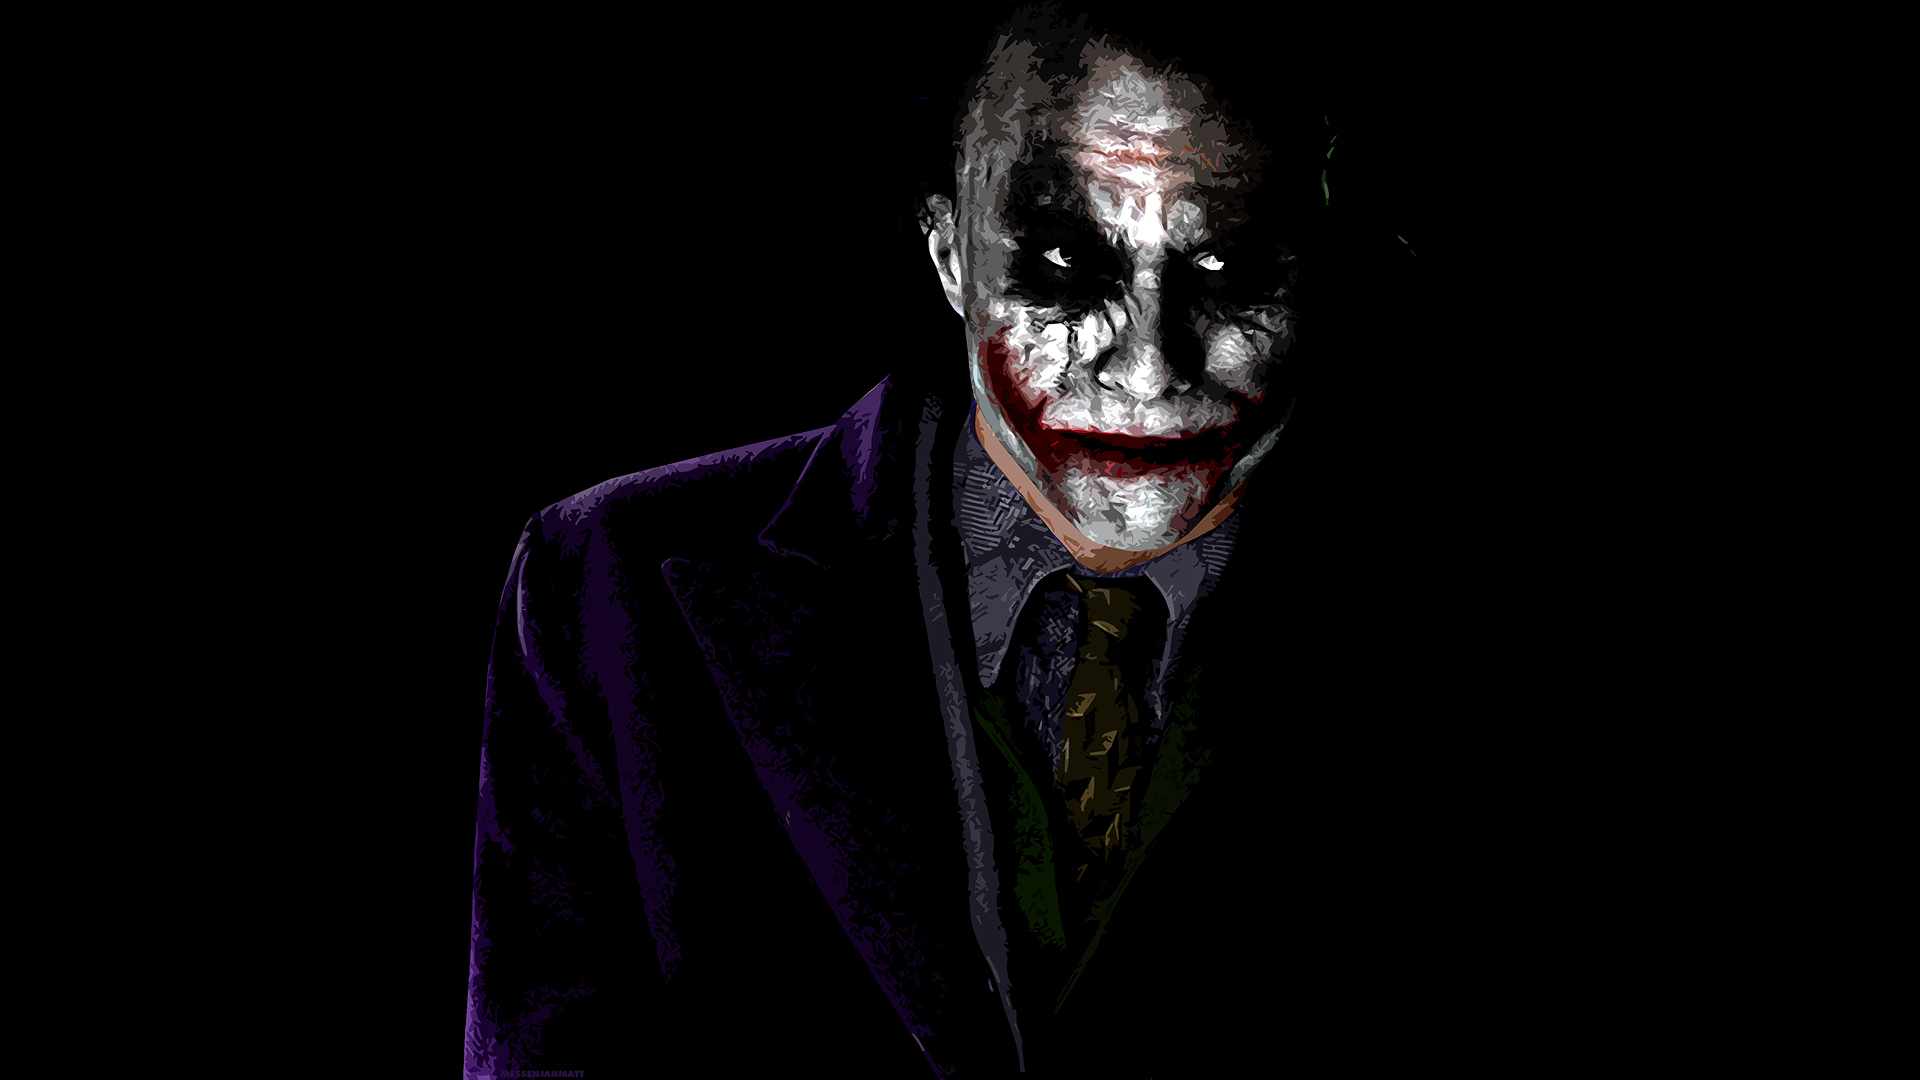 Joker Hd Wallpaper For Android Phone